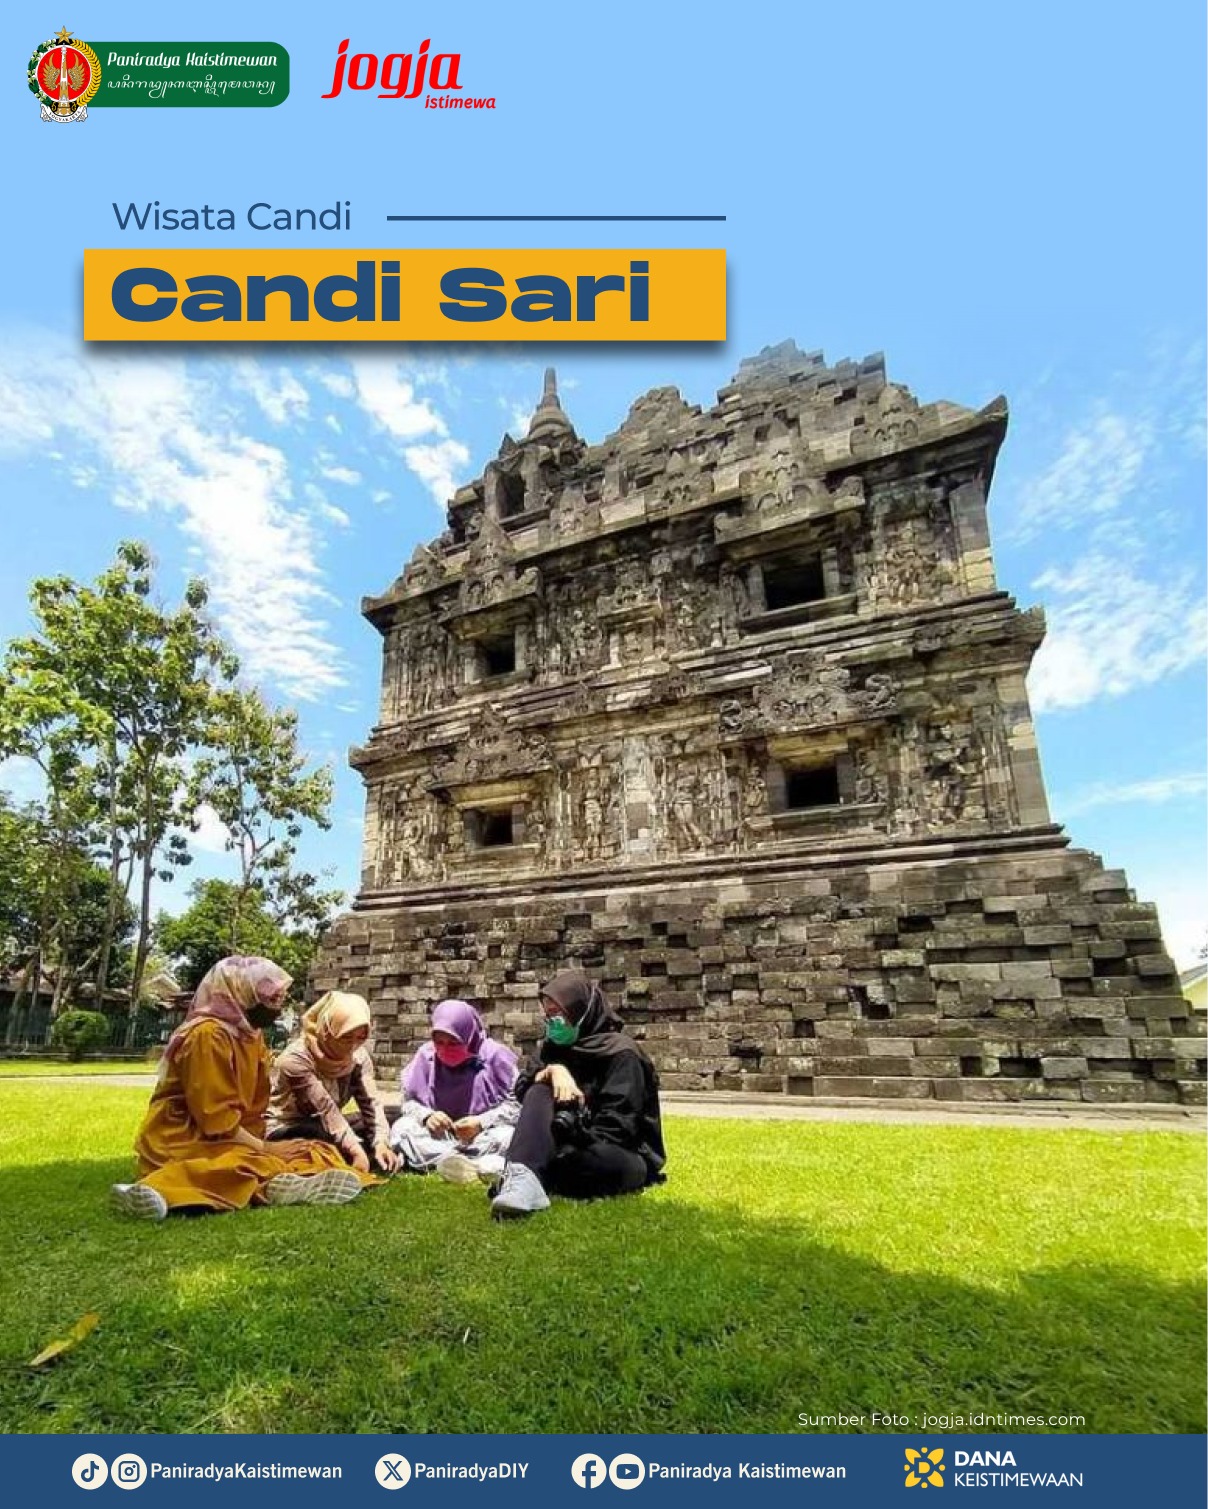 Wisata Candi - Candi Sari